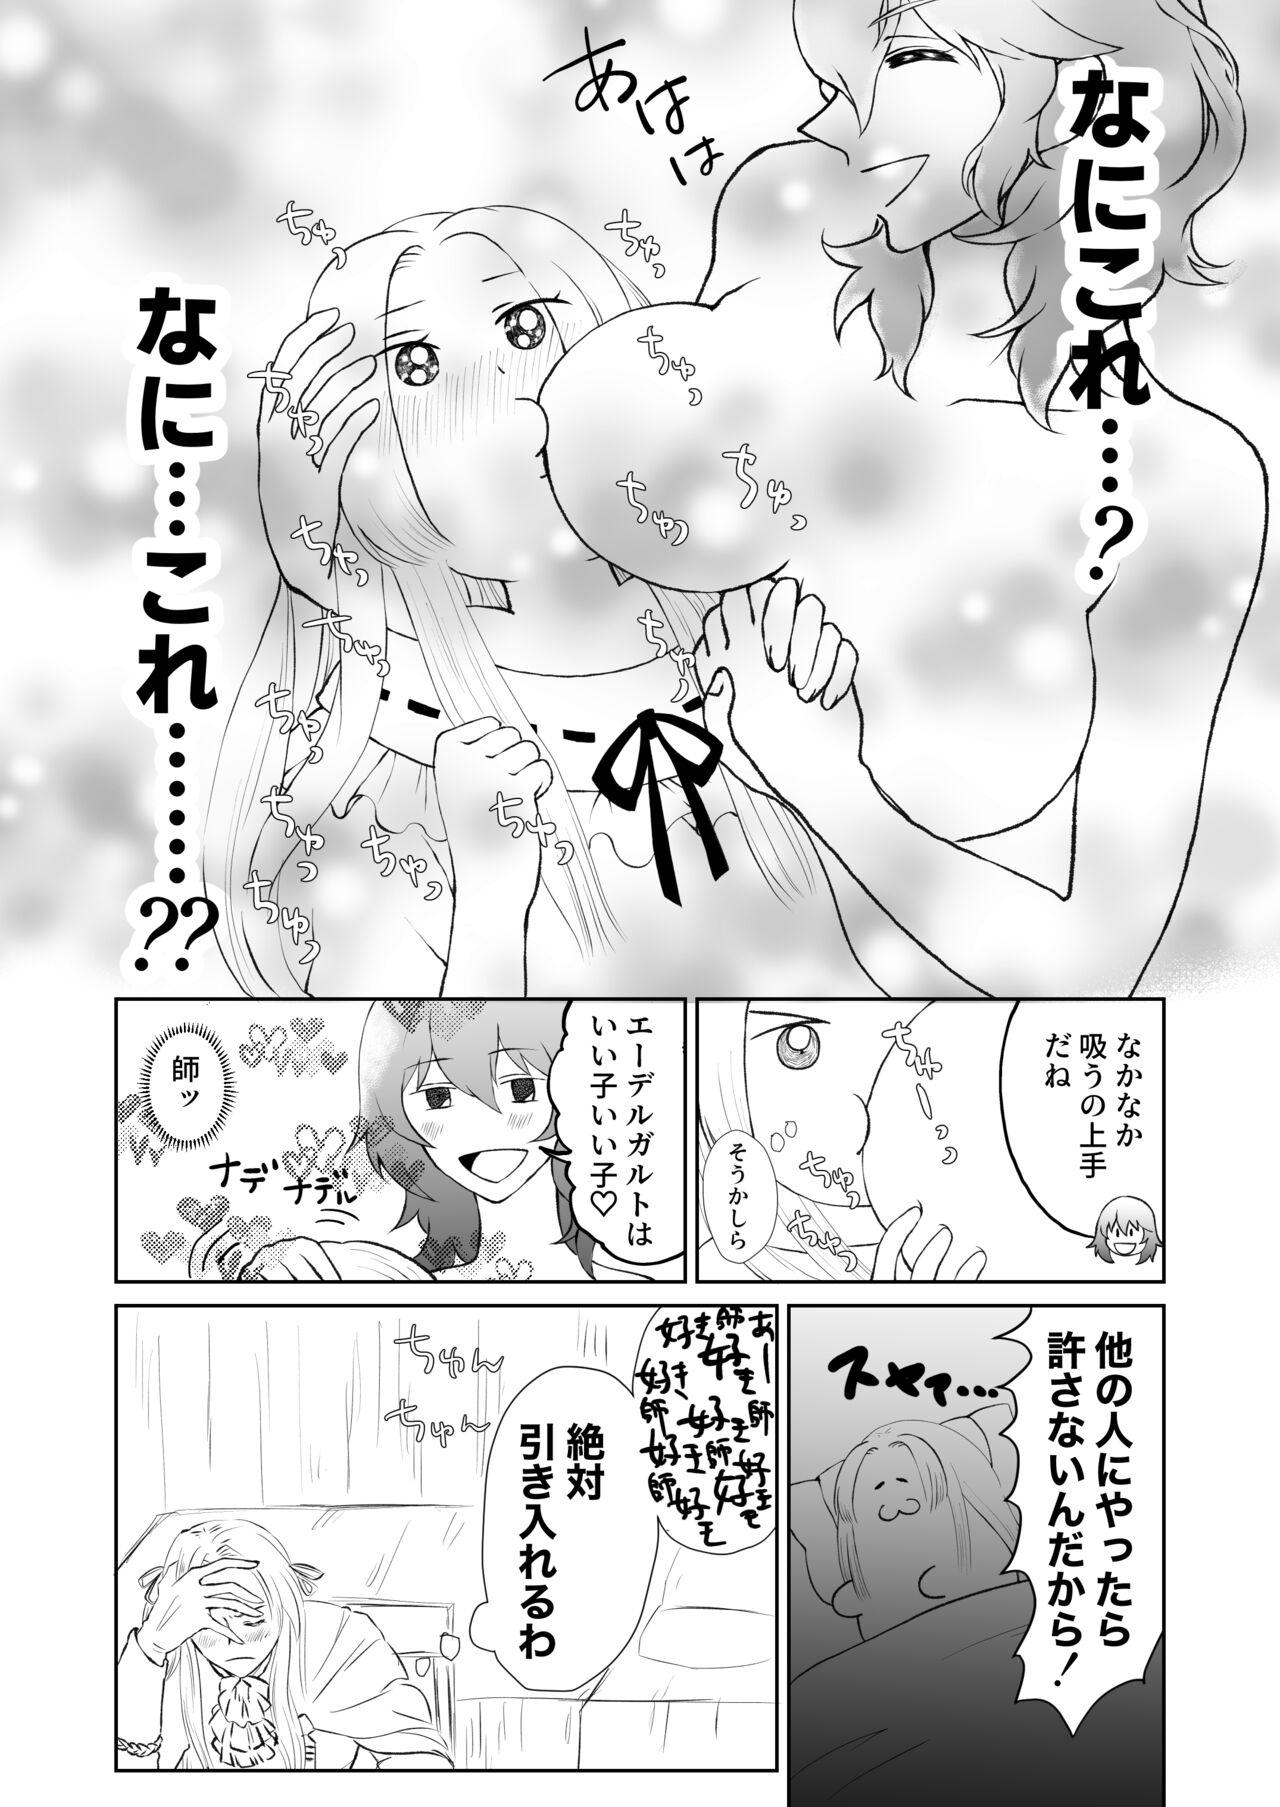 Resuede Manga "Nekashitsuke" 4